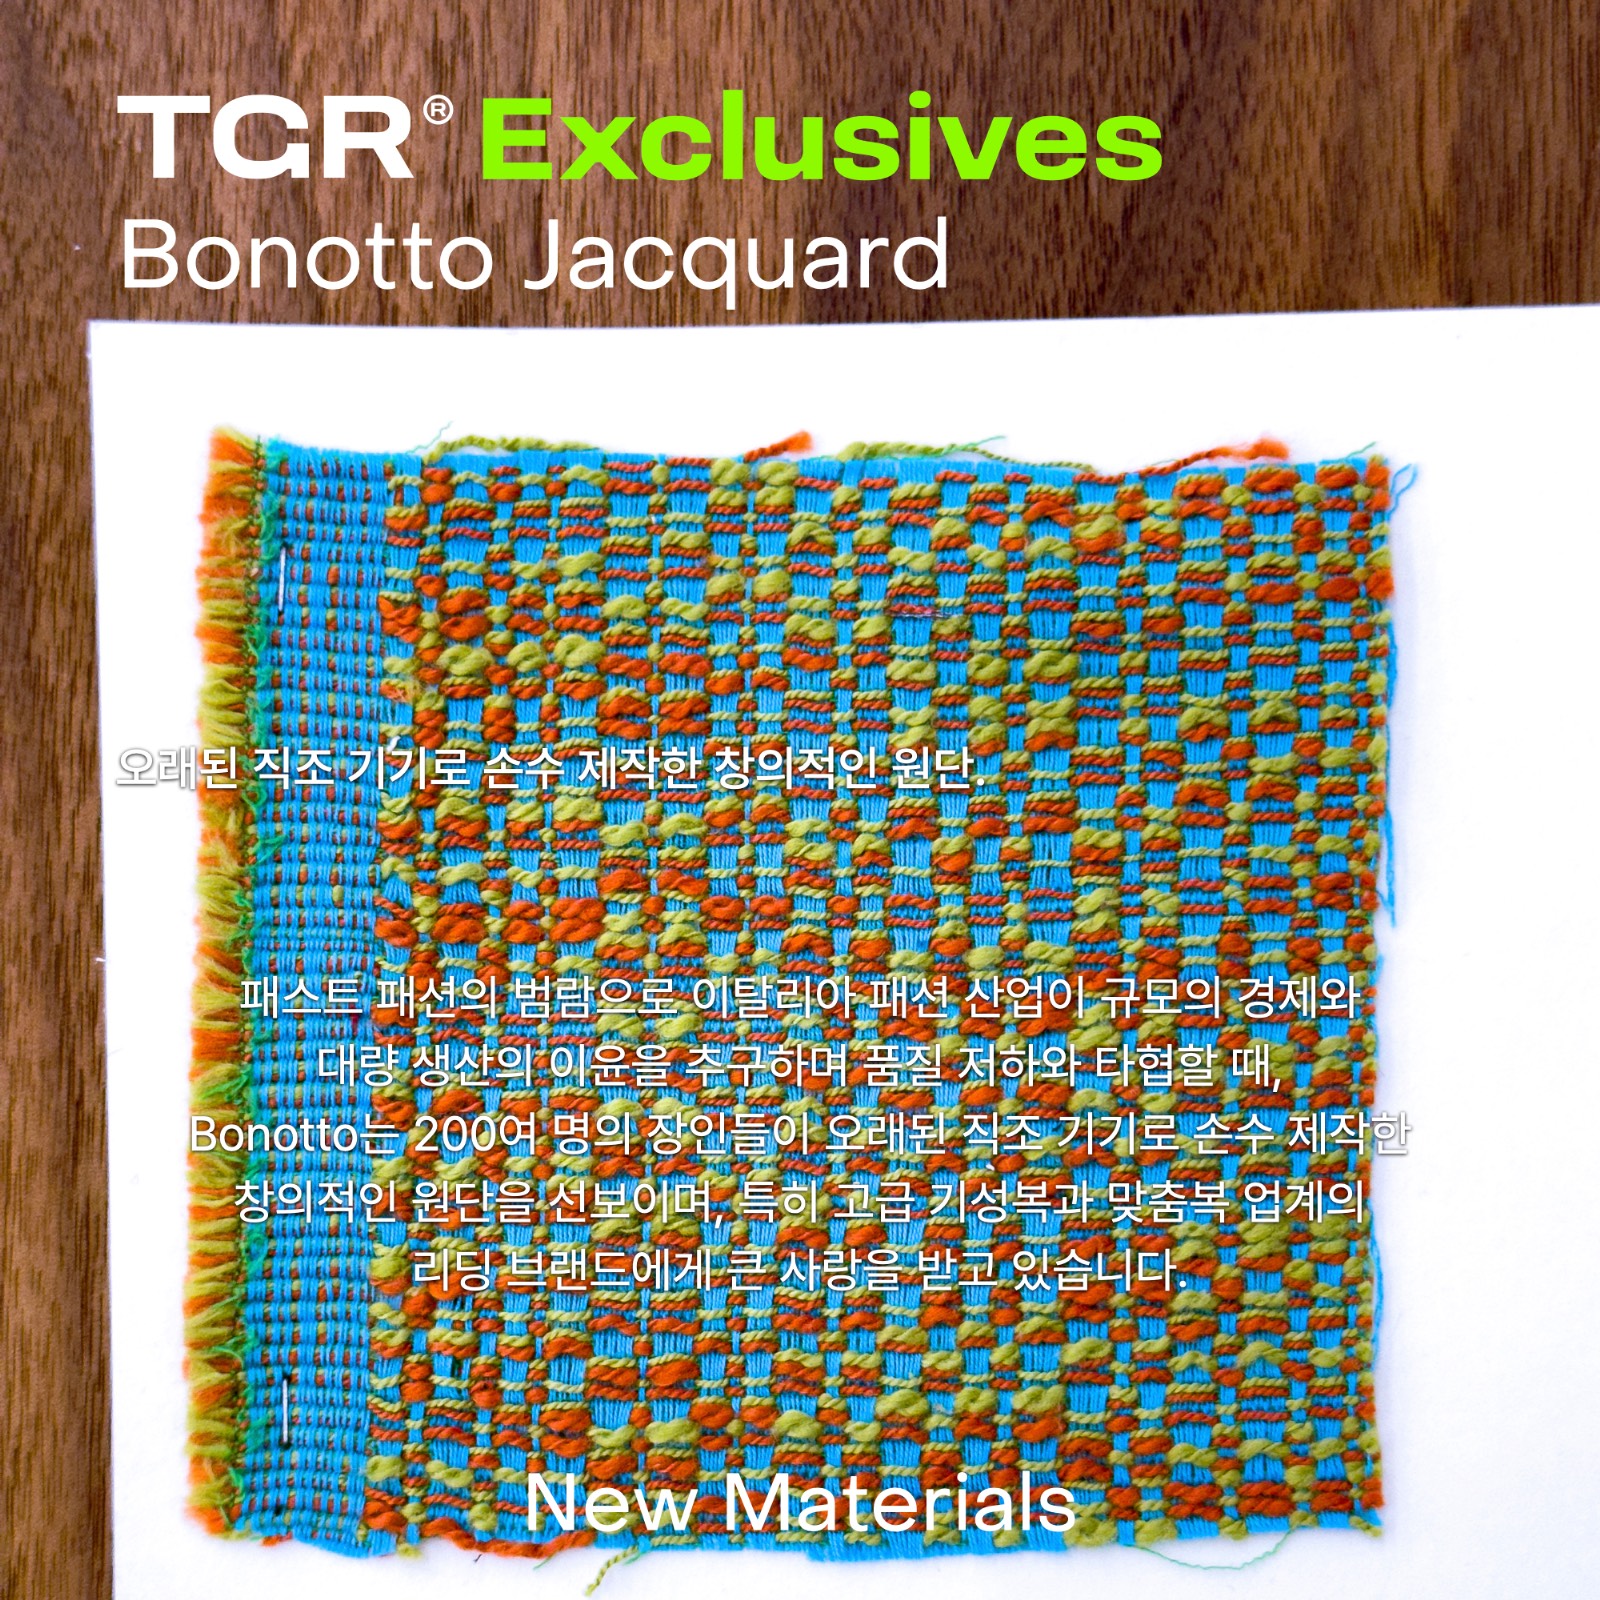 TGR® Exclusives - Bonotto Jacquard